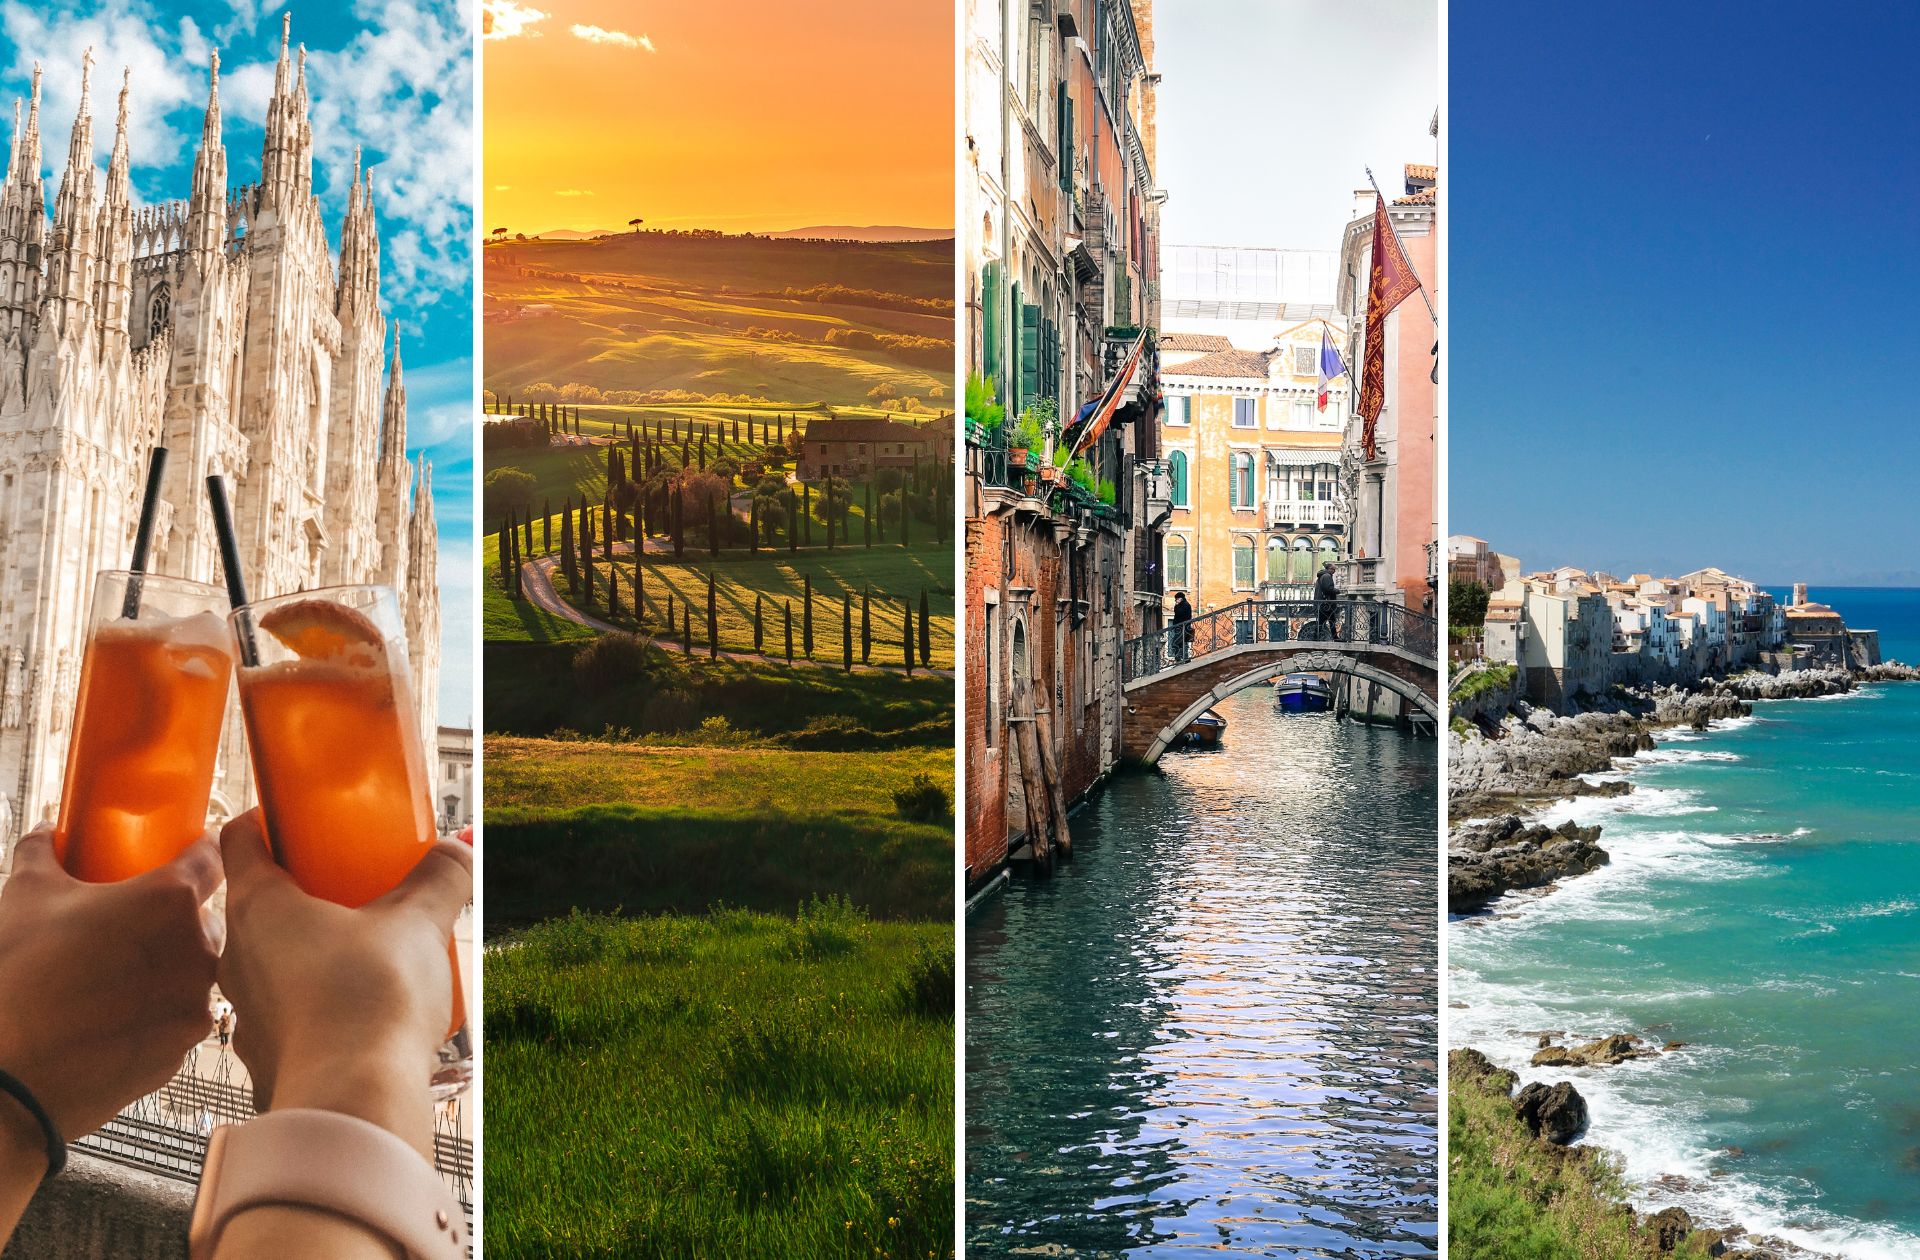 Top 5 Italian regions to visit in 2023